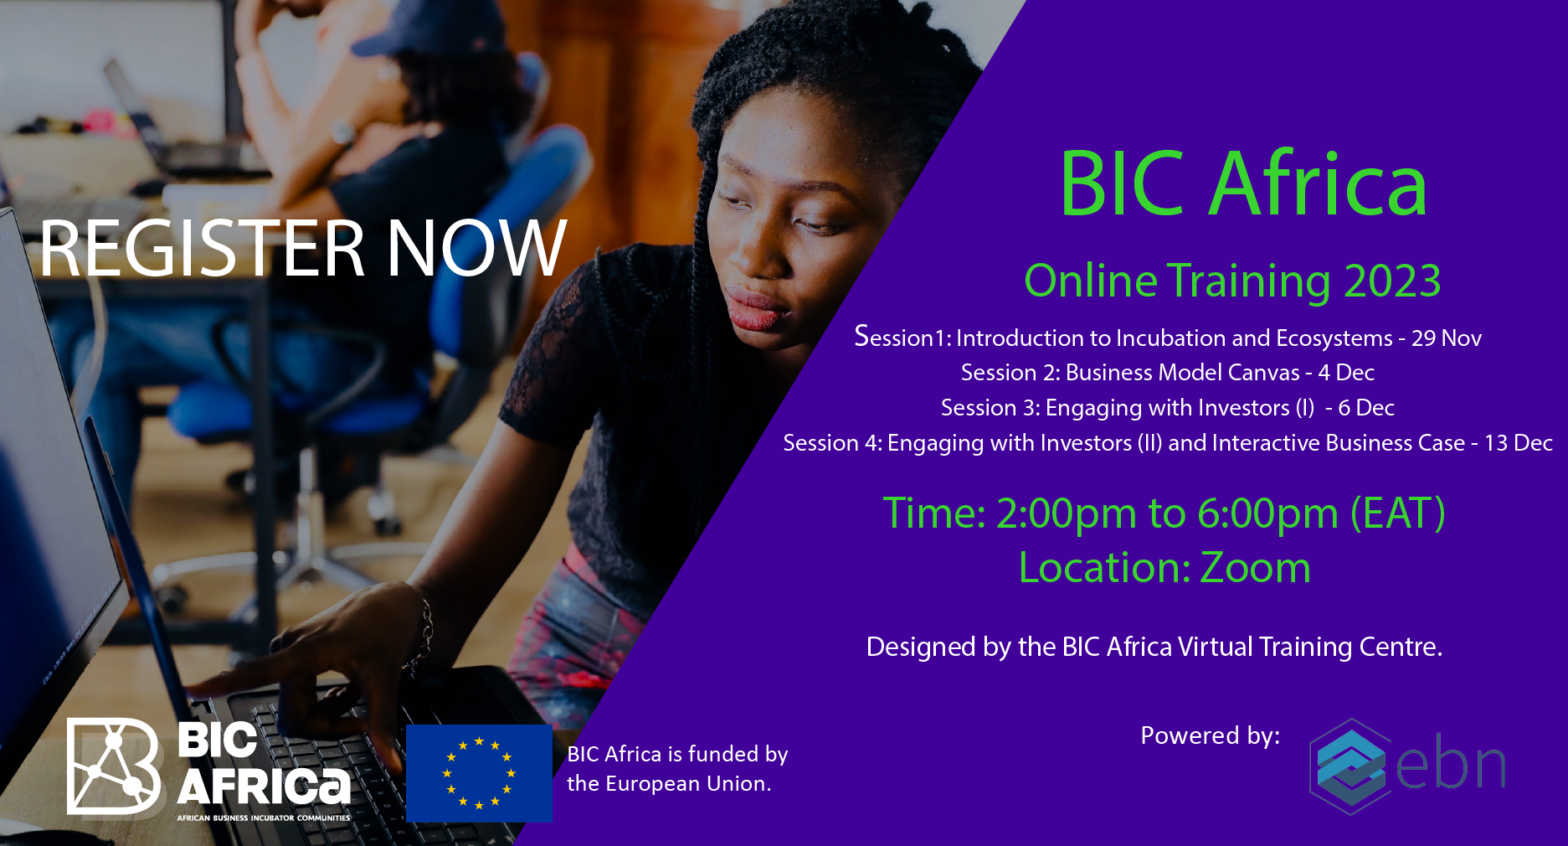 BIC Africa Online Training 2023